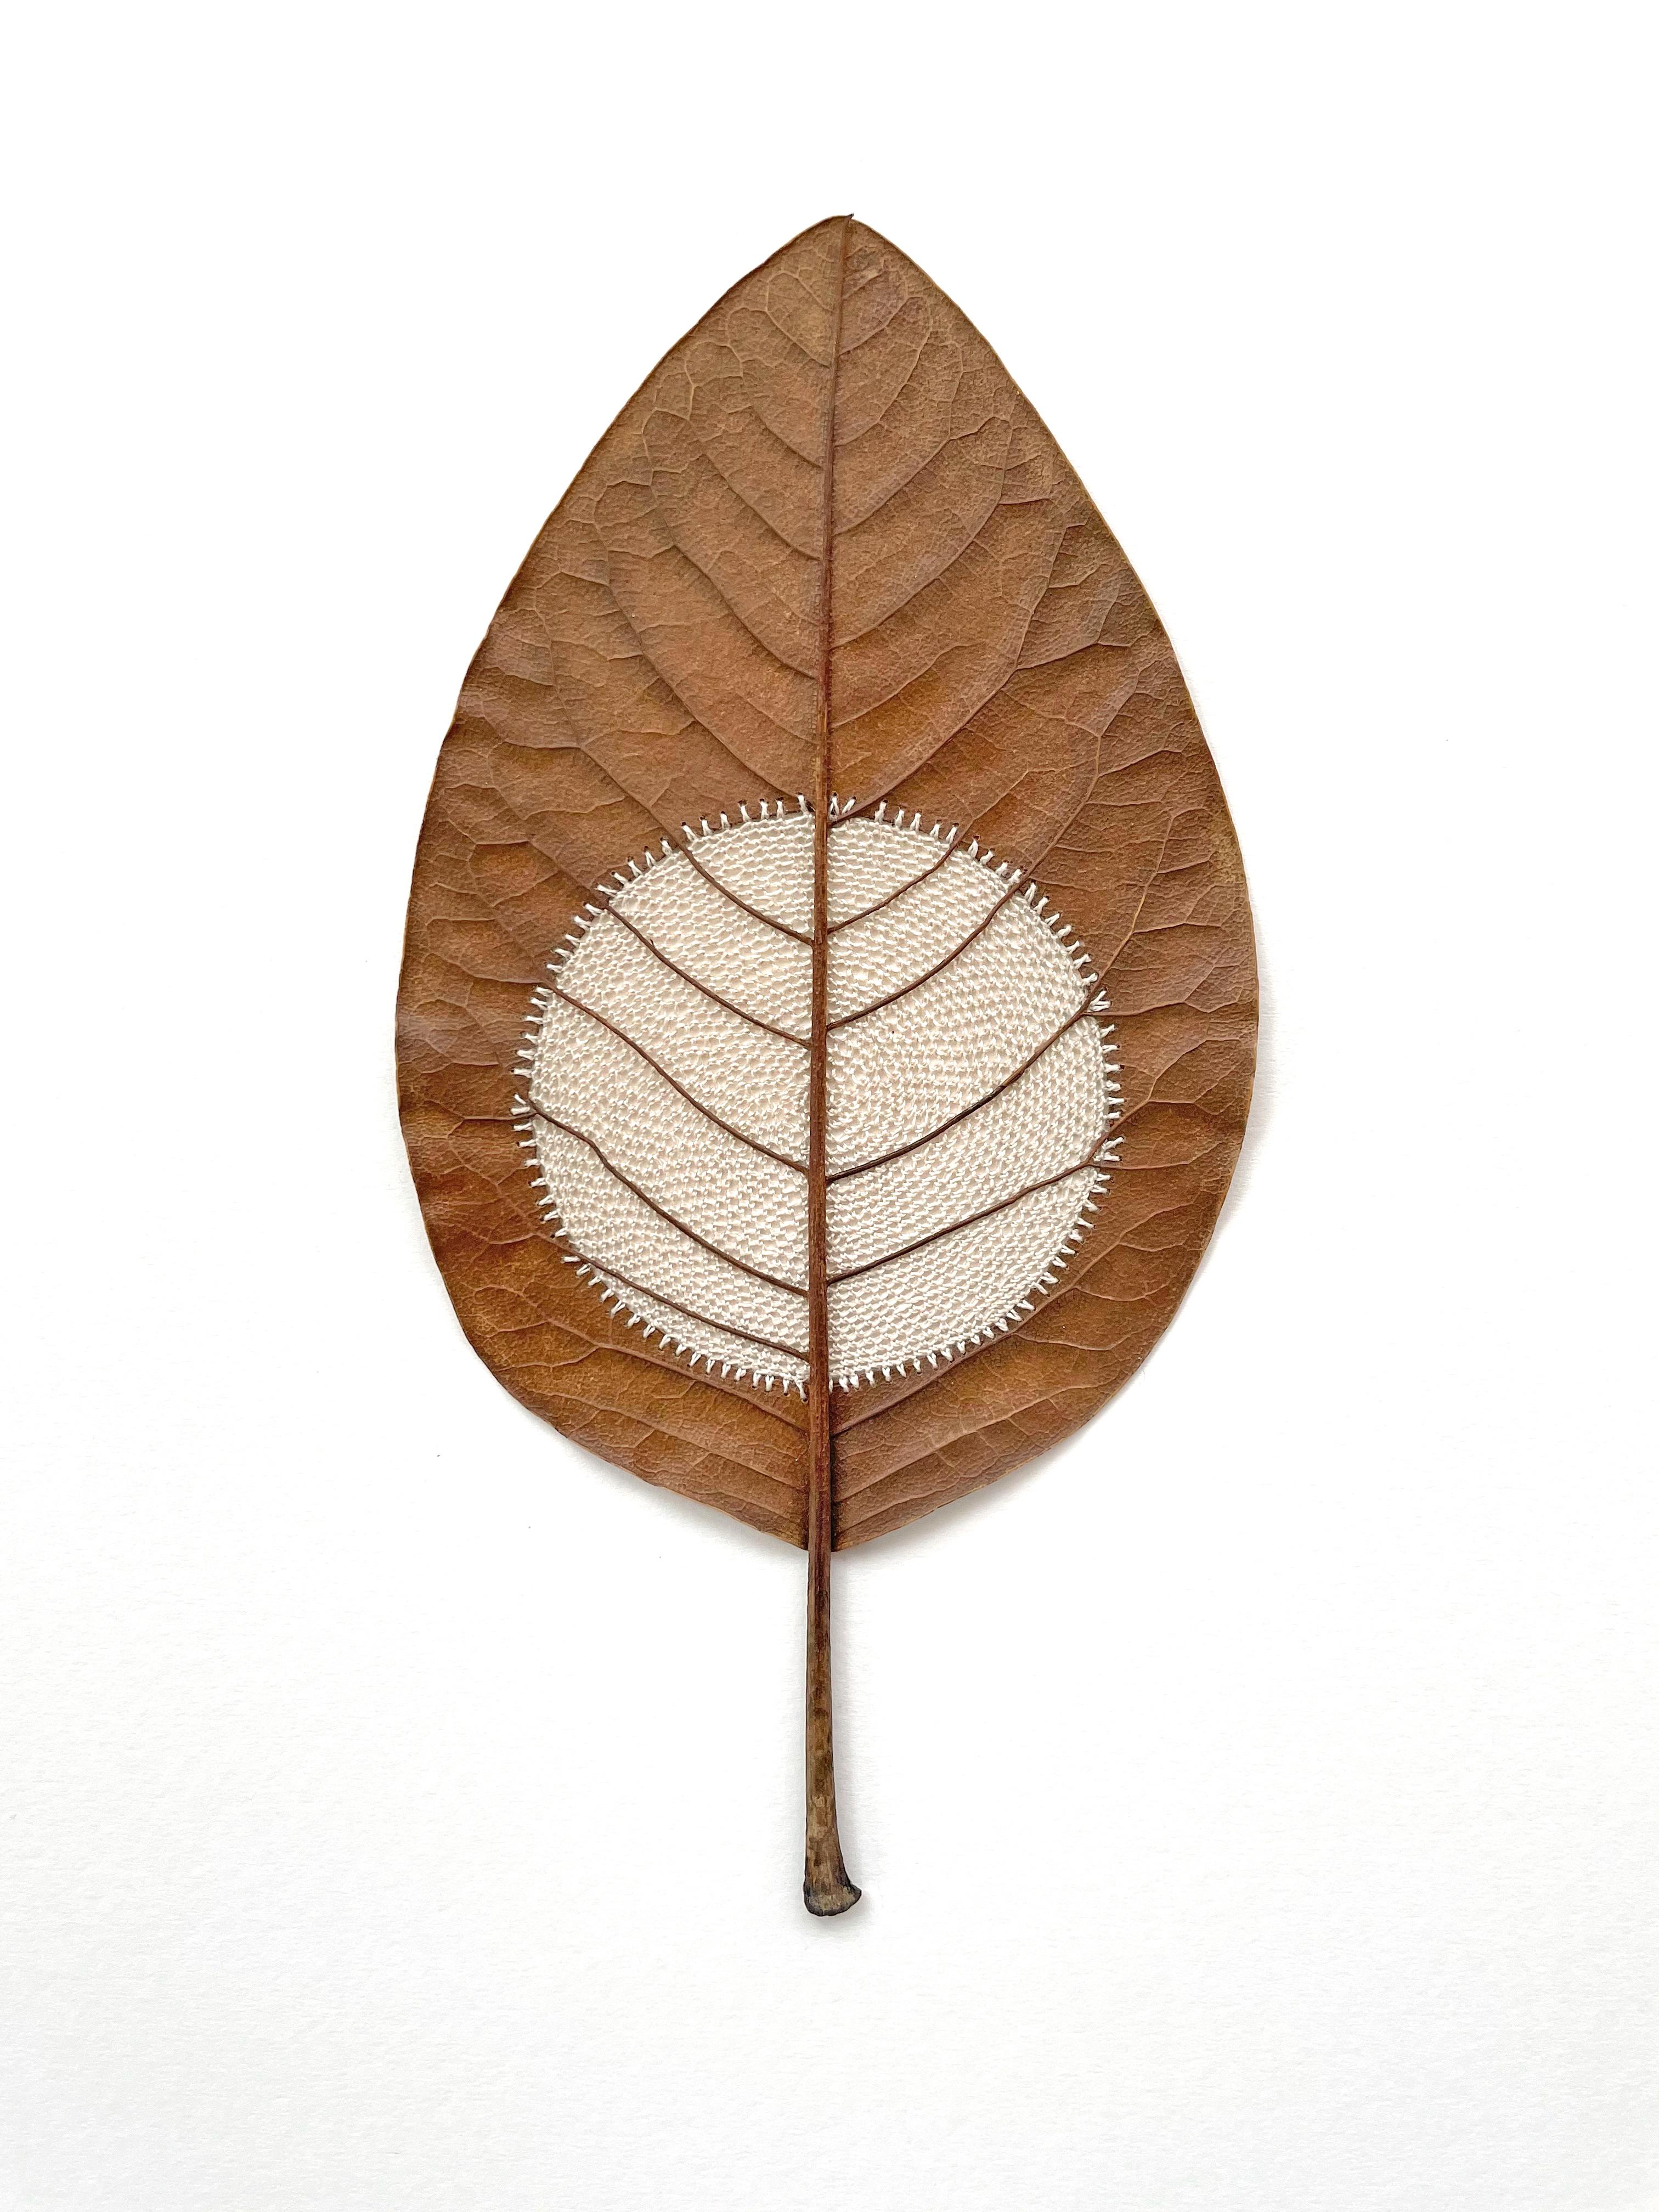 Moon 65 - contemporary crochet dried magnolia leaf nature art framed - Mixed Media Art by Susanna Bauer